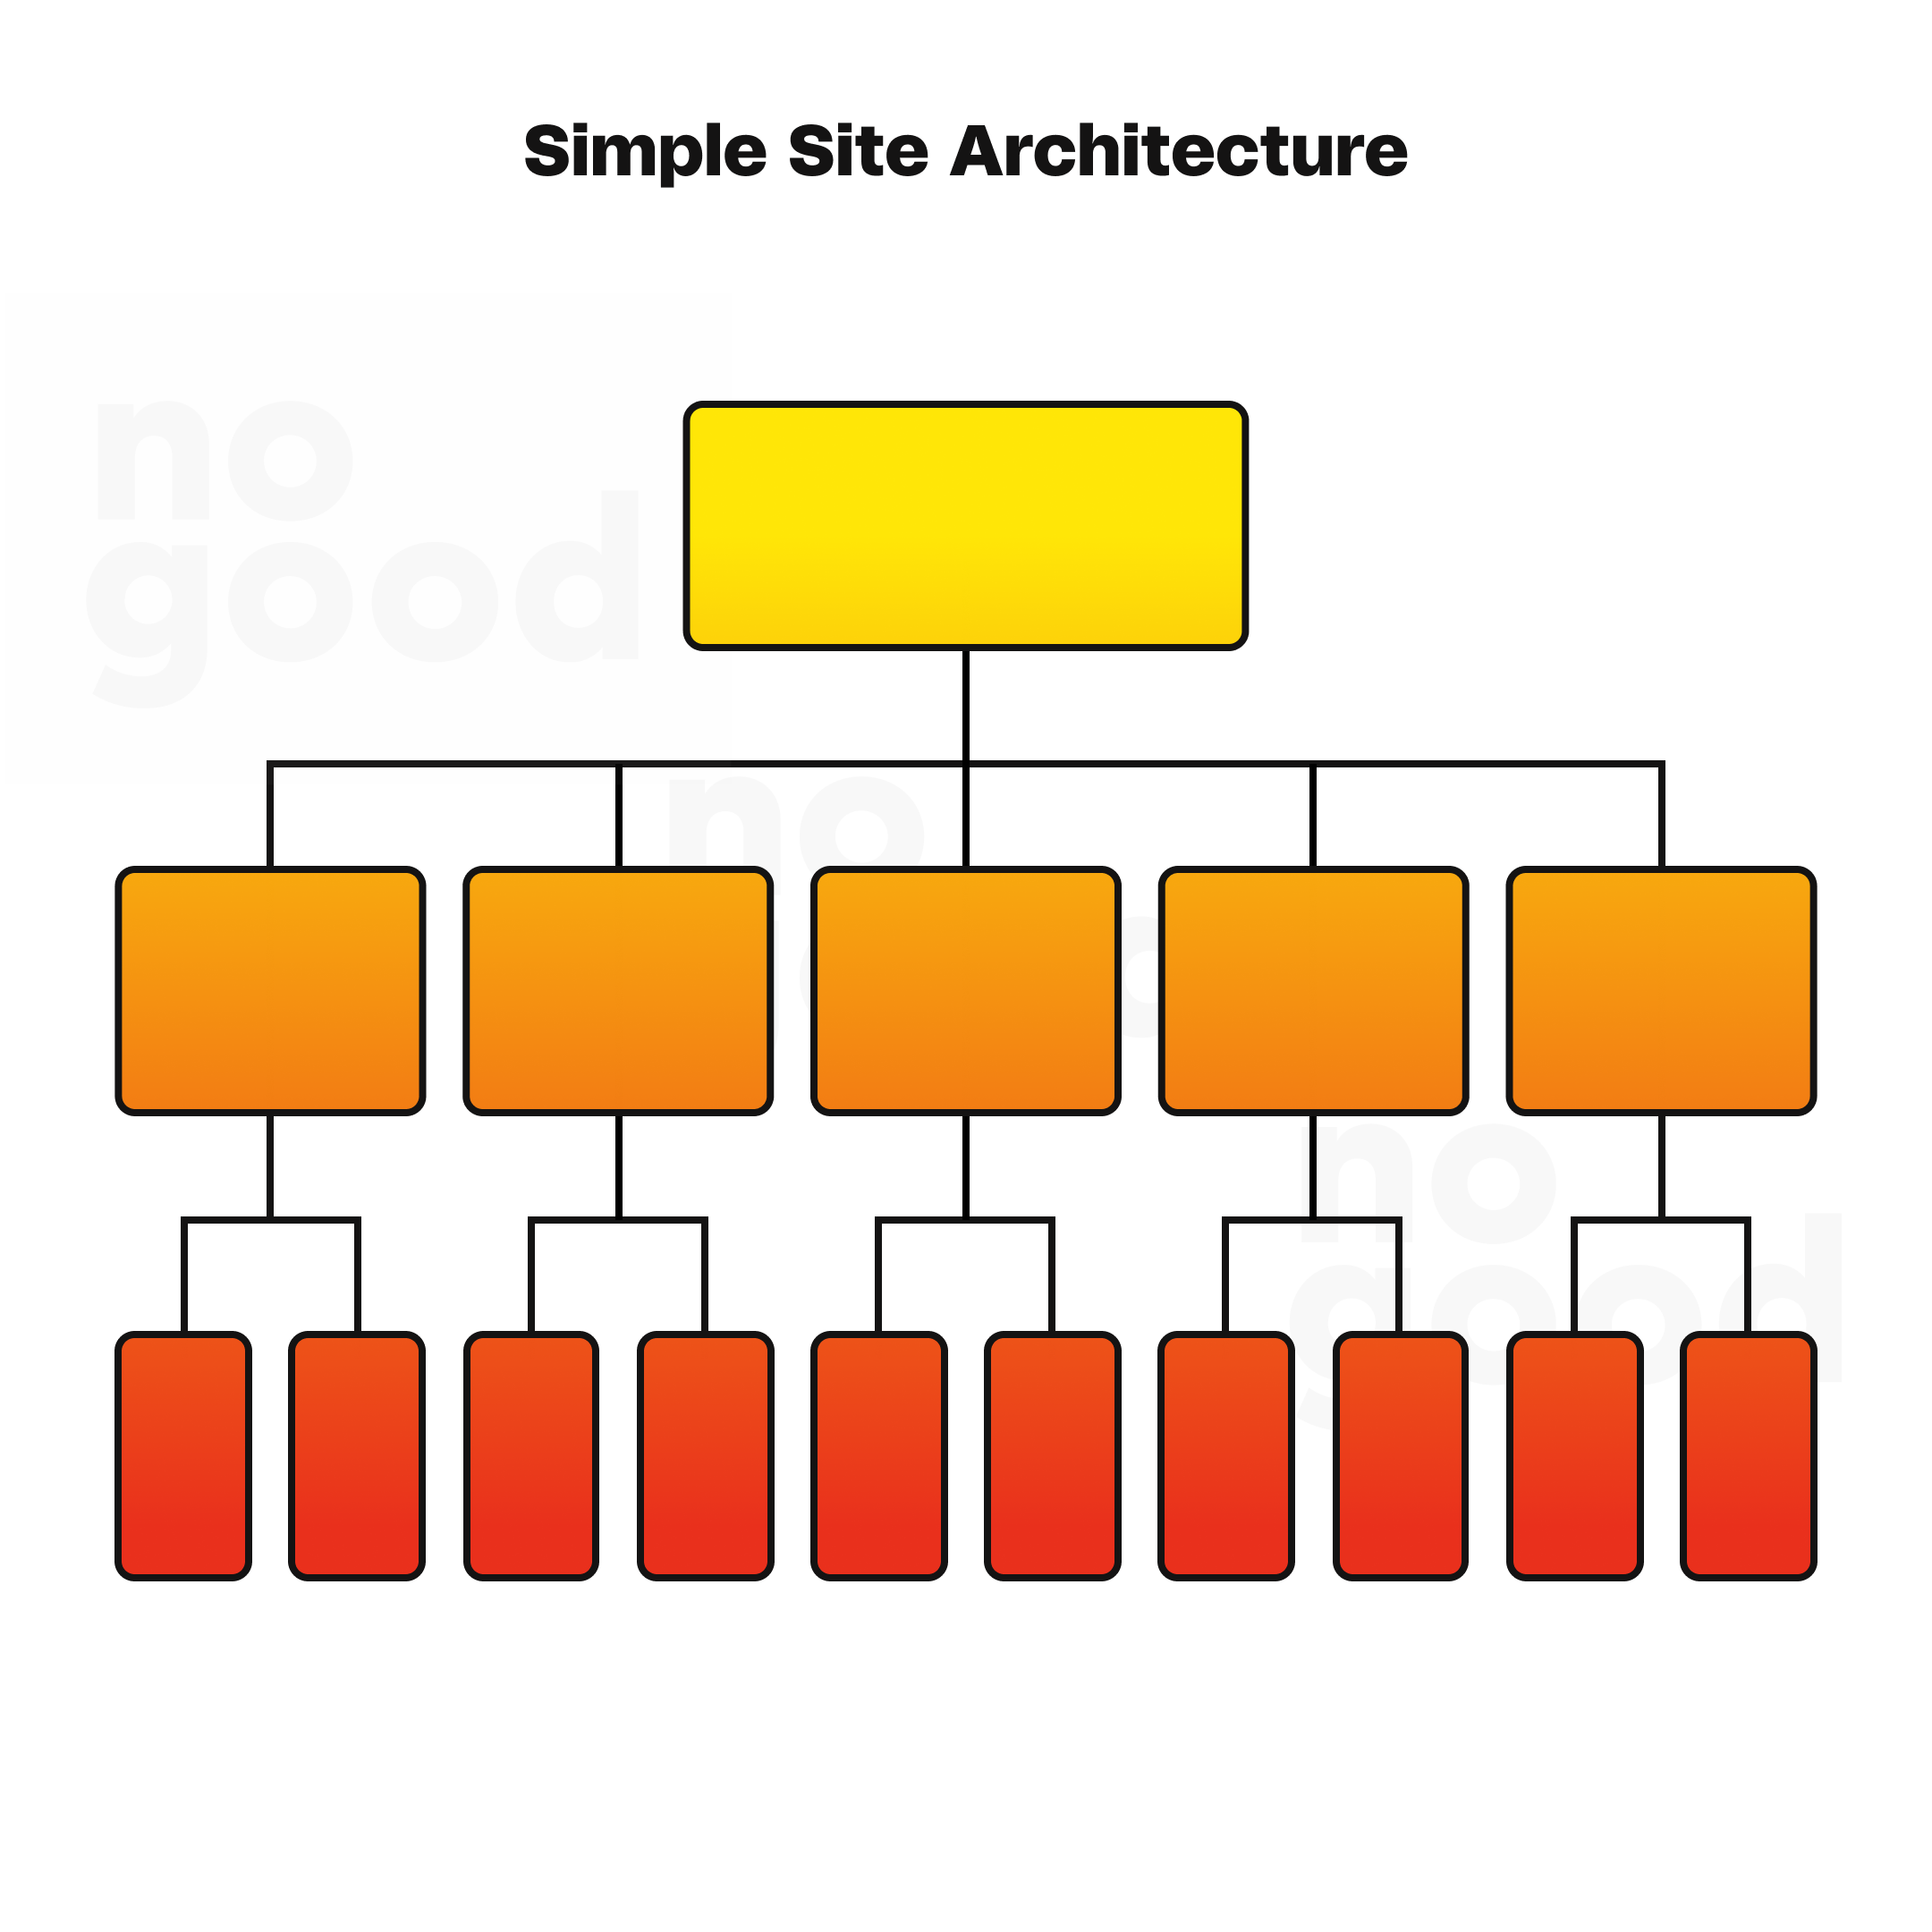 Simple site architecture